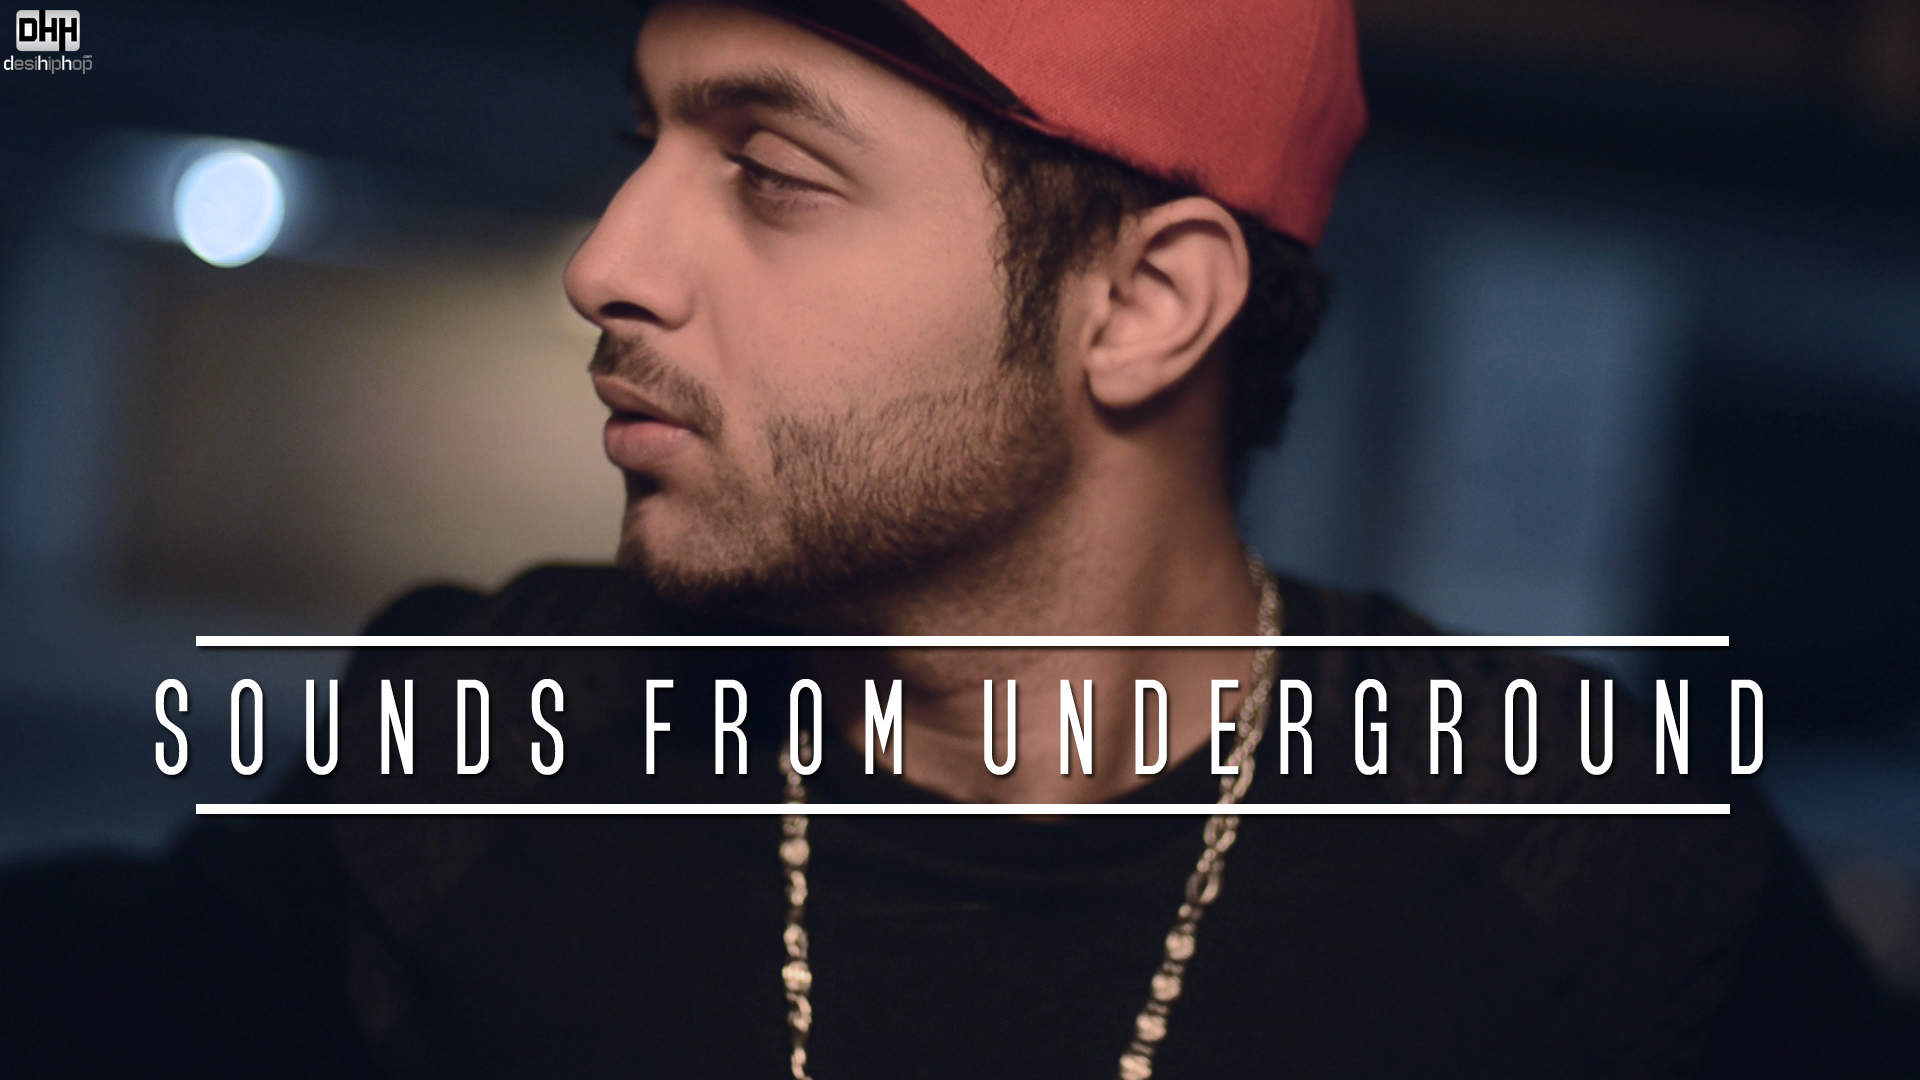 rap demon abdullah malik sounds from underground